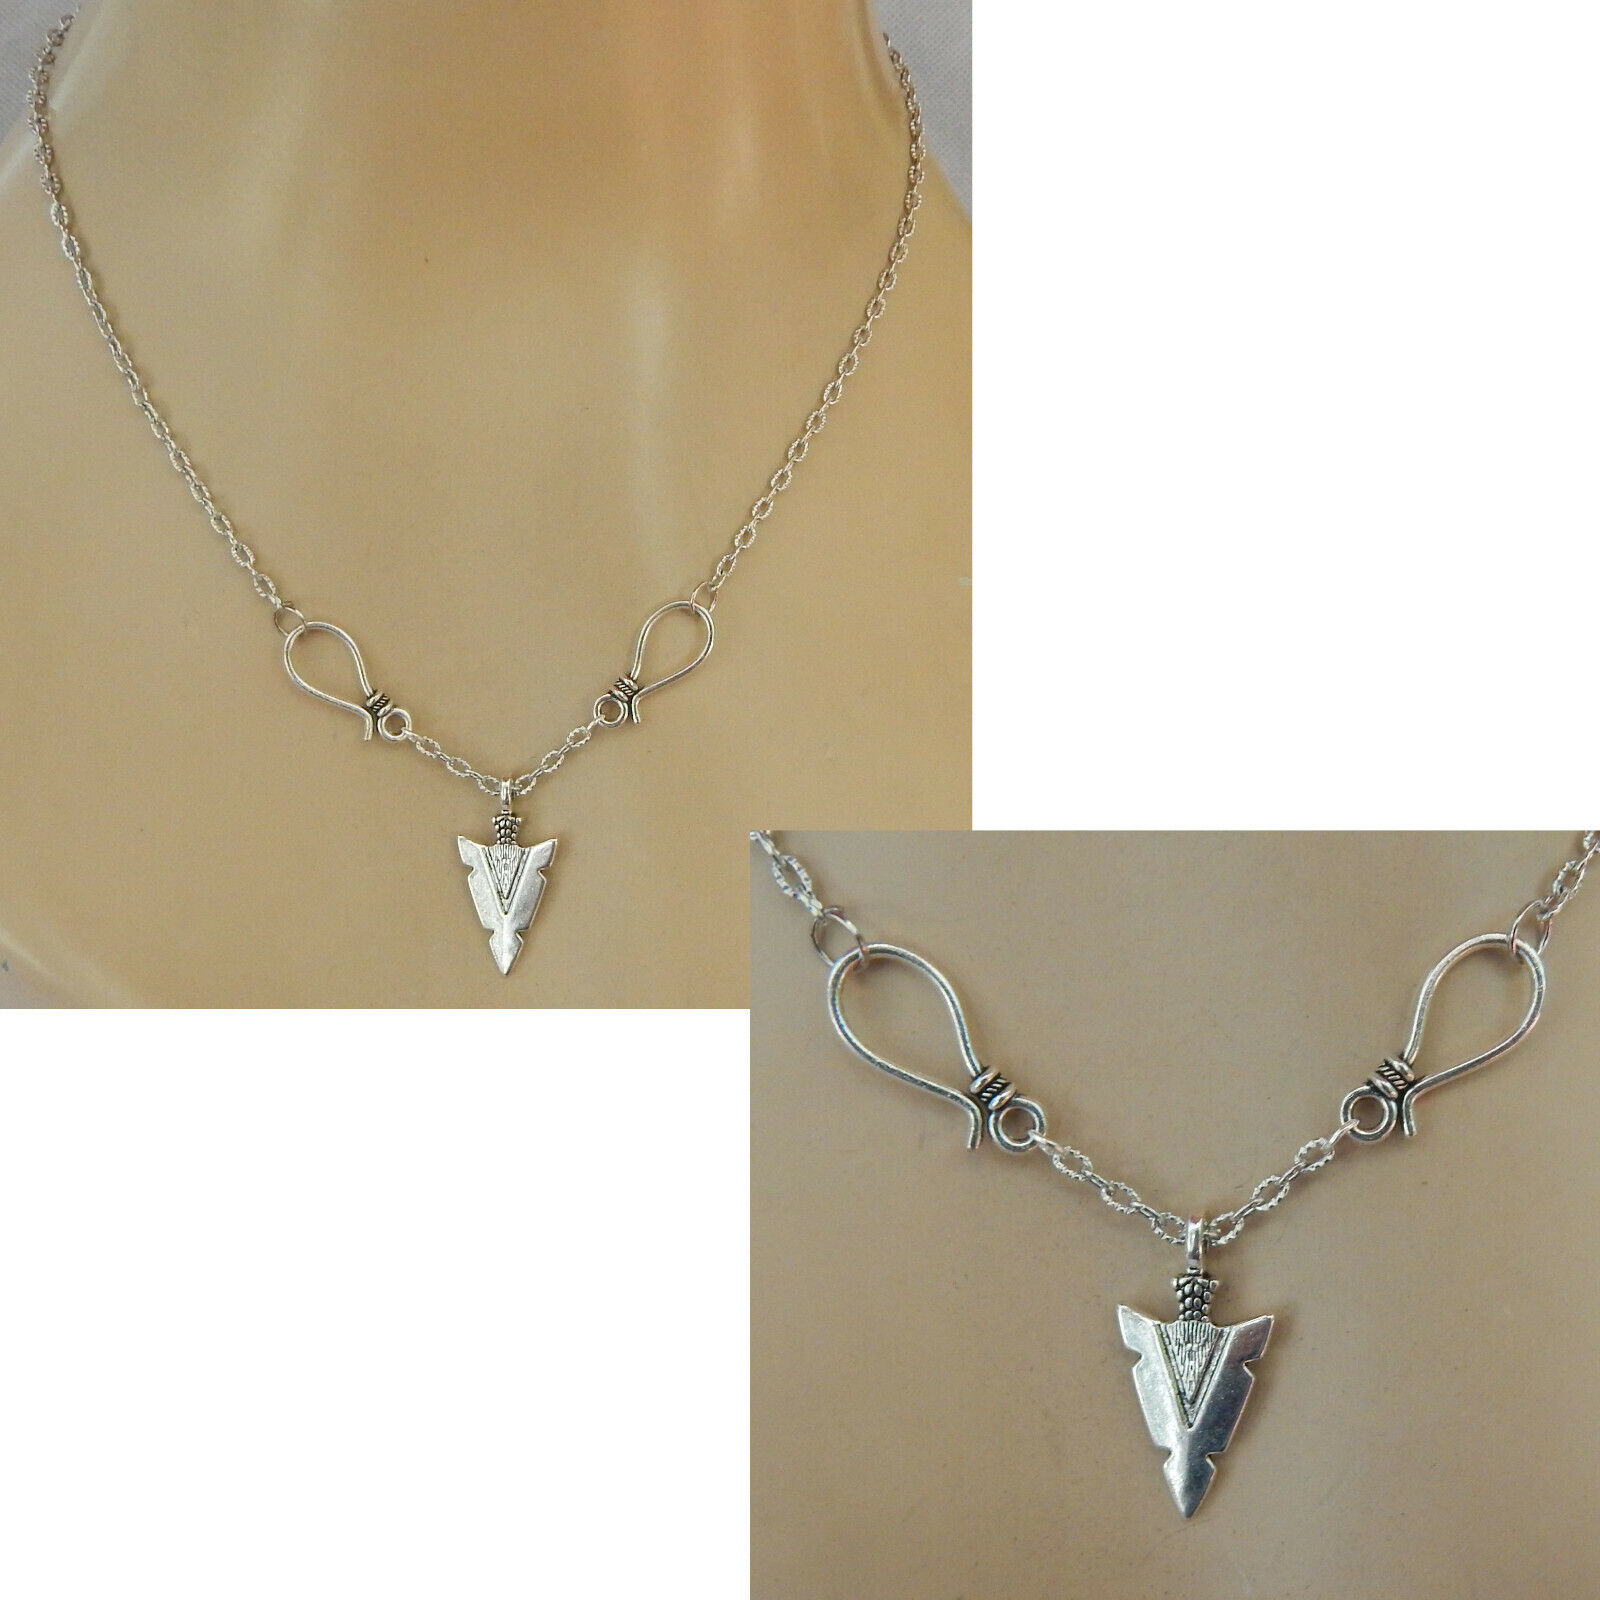 Arrowhead Necklace Pendant Silver Chain Southwestern Women New Fashion Handmade